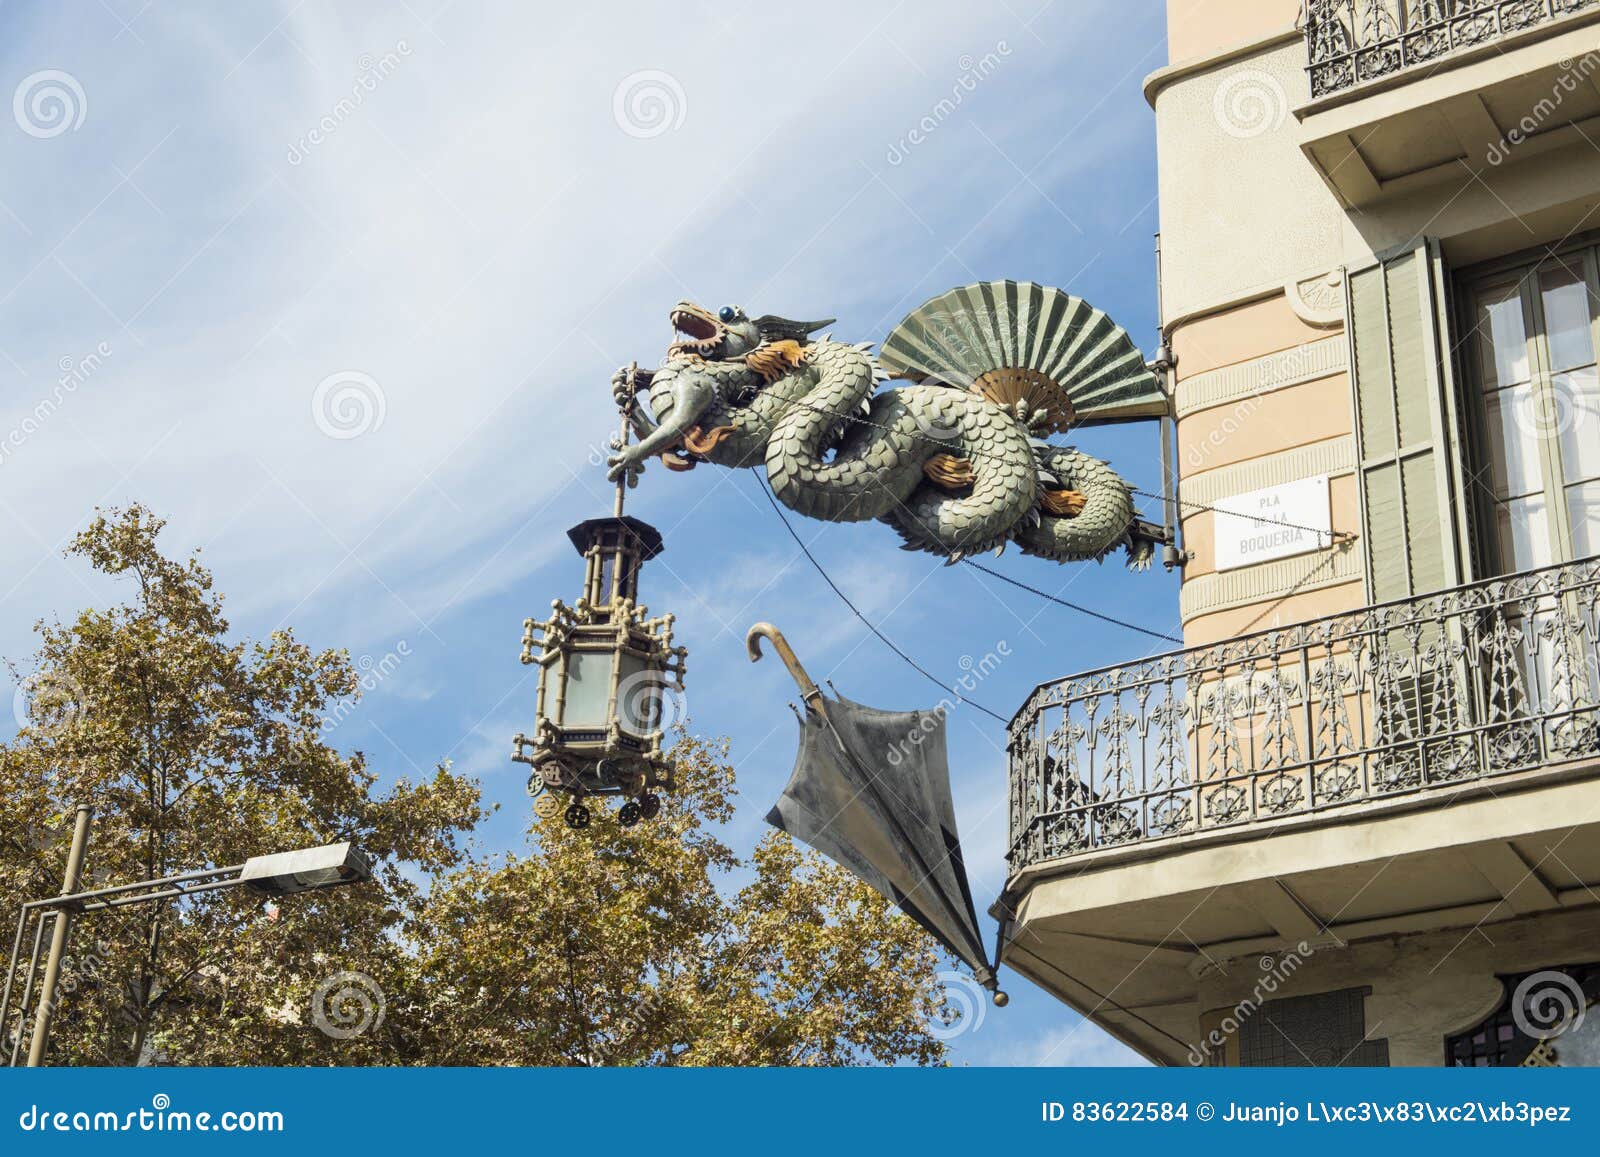 statue of dragon at `house of umbrellas` house bruno cuadros located in las ramblas in barcelona, catalonia, spain